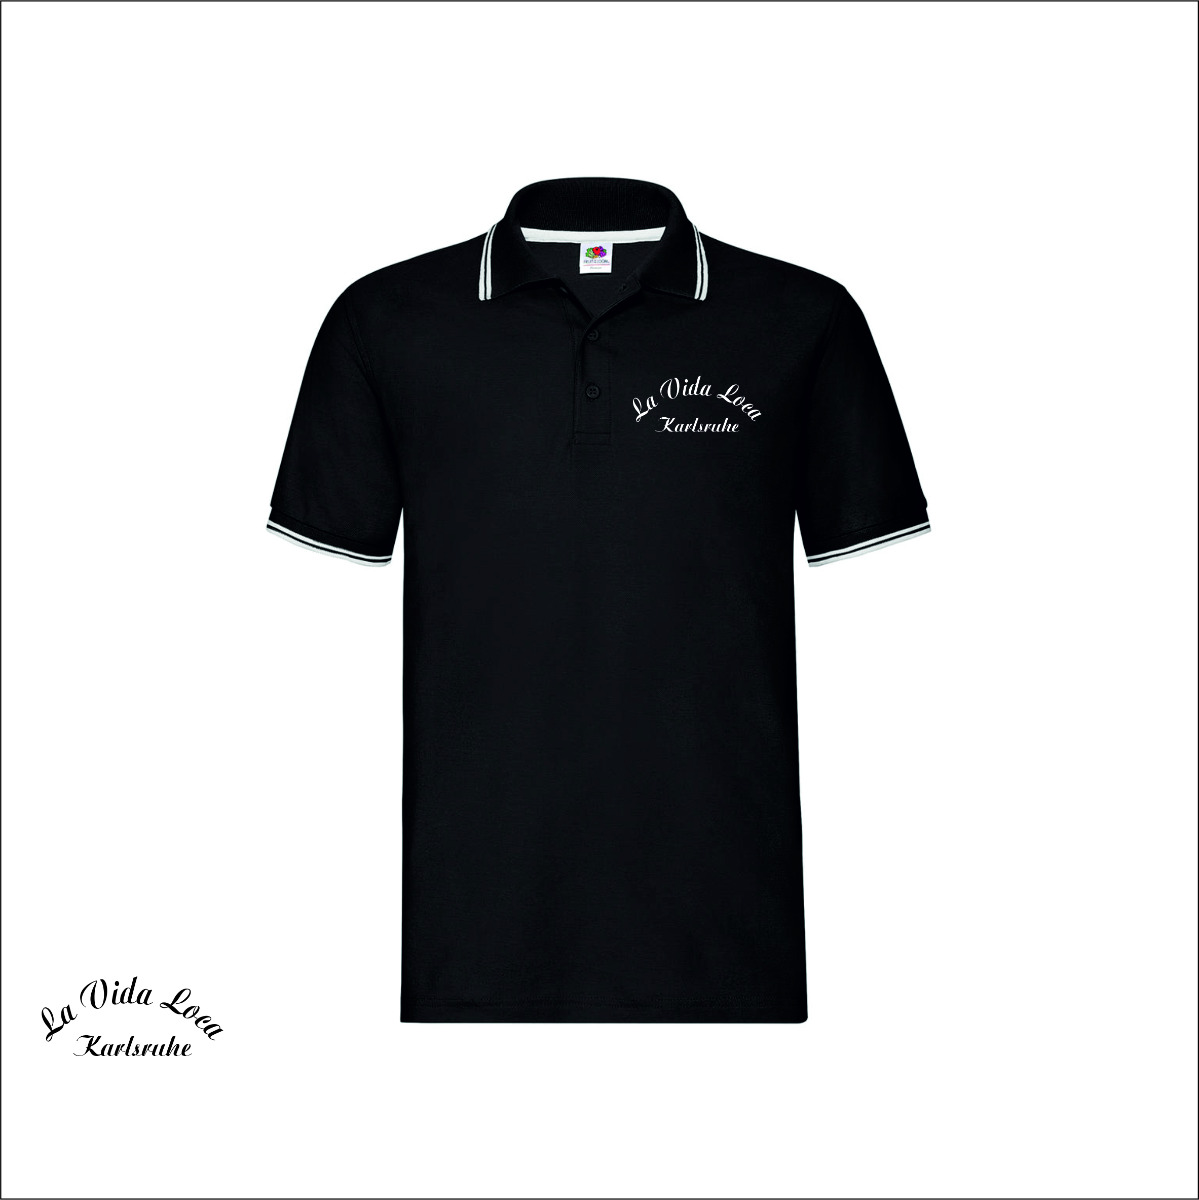 Besticktes Polo-Shirt "La Vida Loca Karlsruhe" Schriftzug, schwarz/weiß